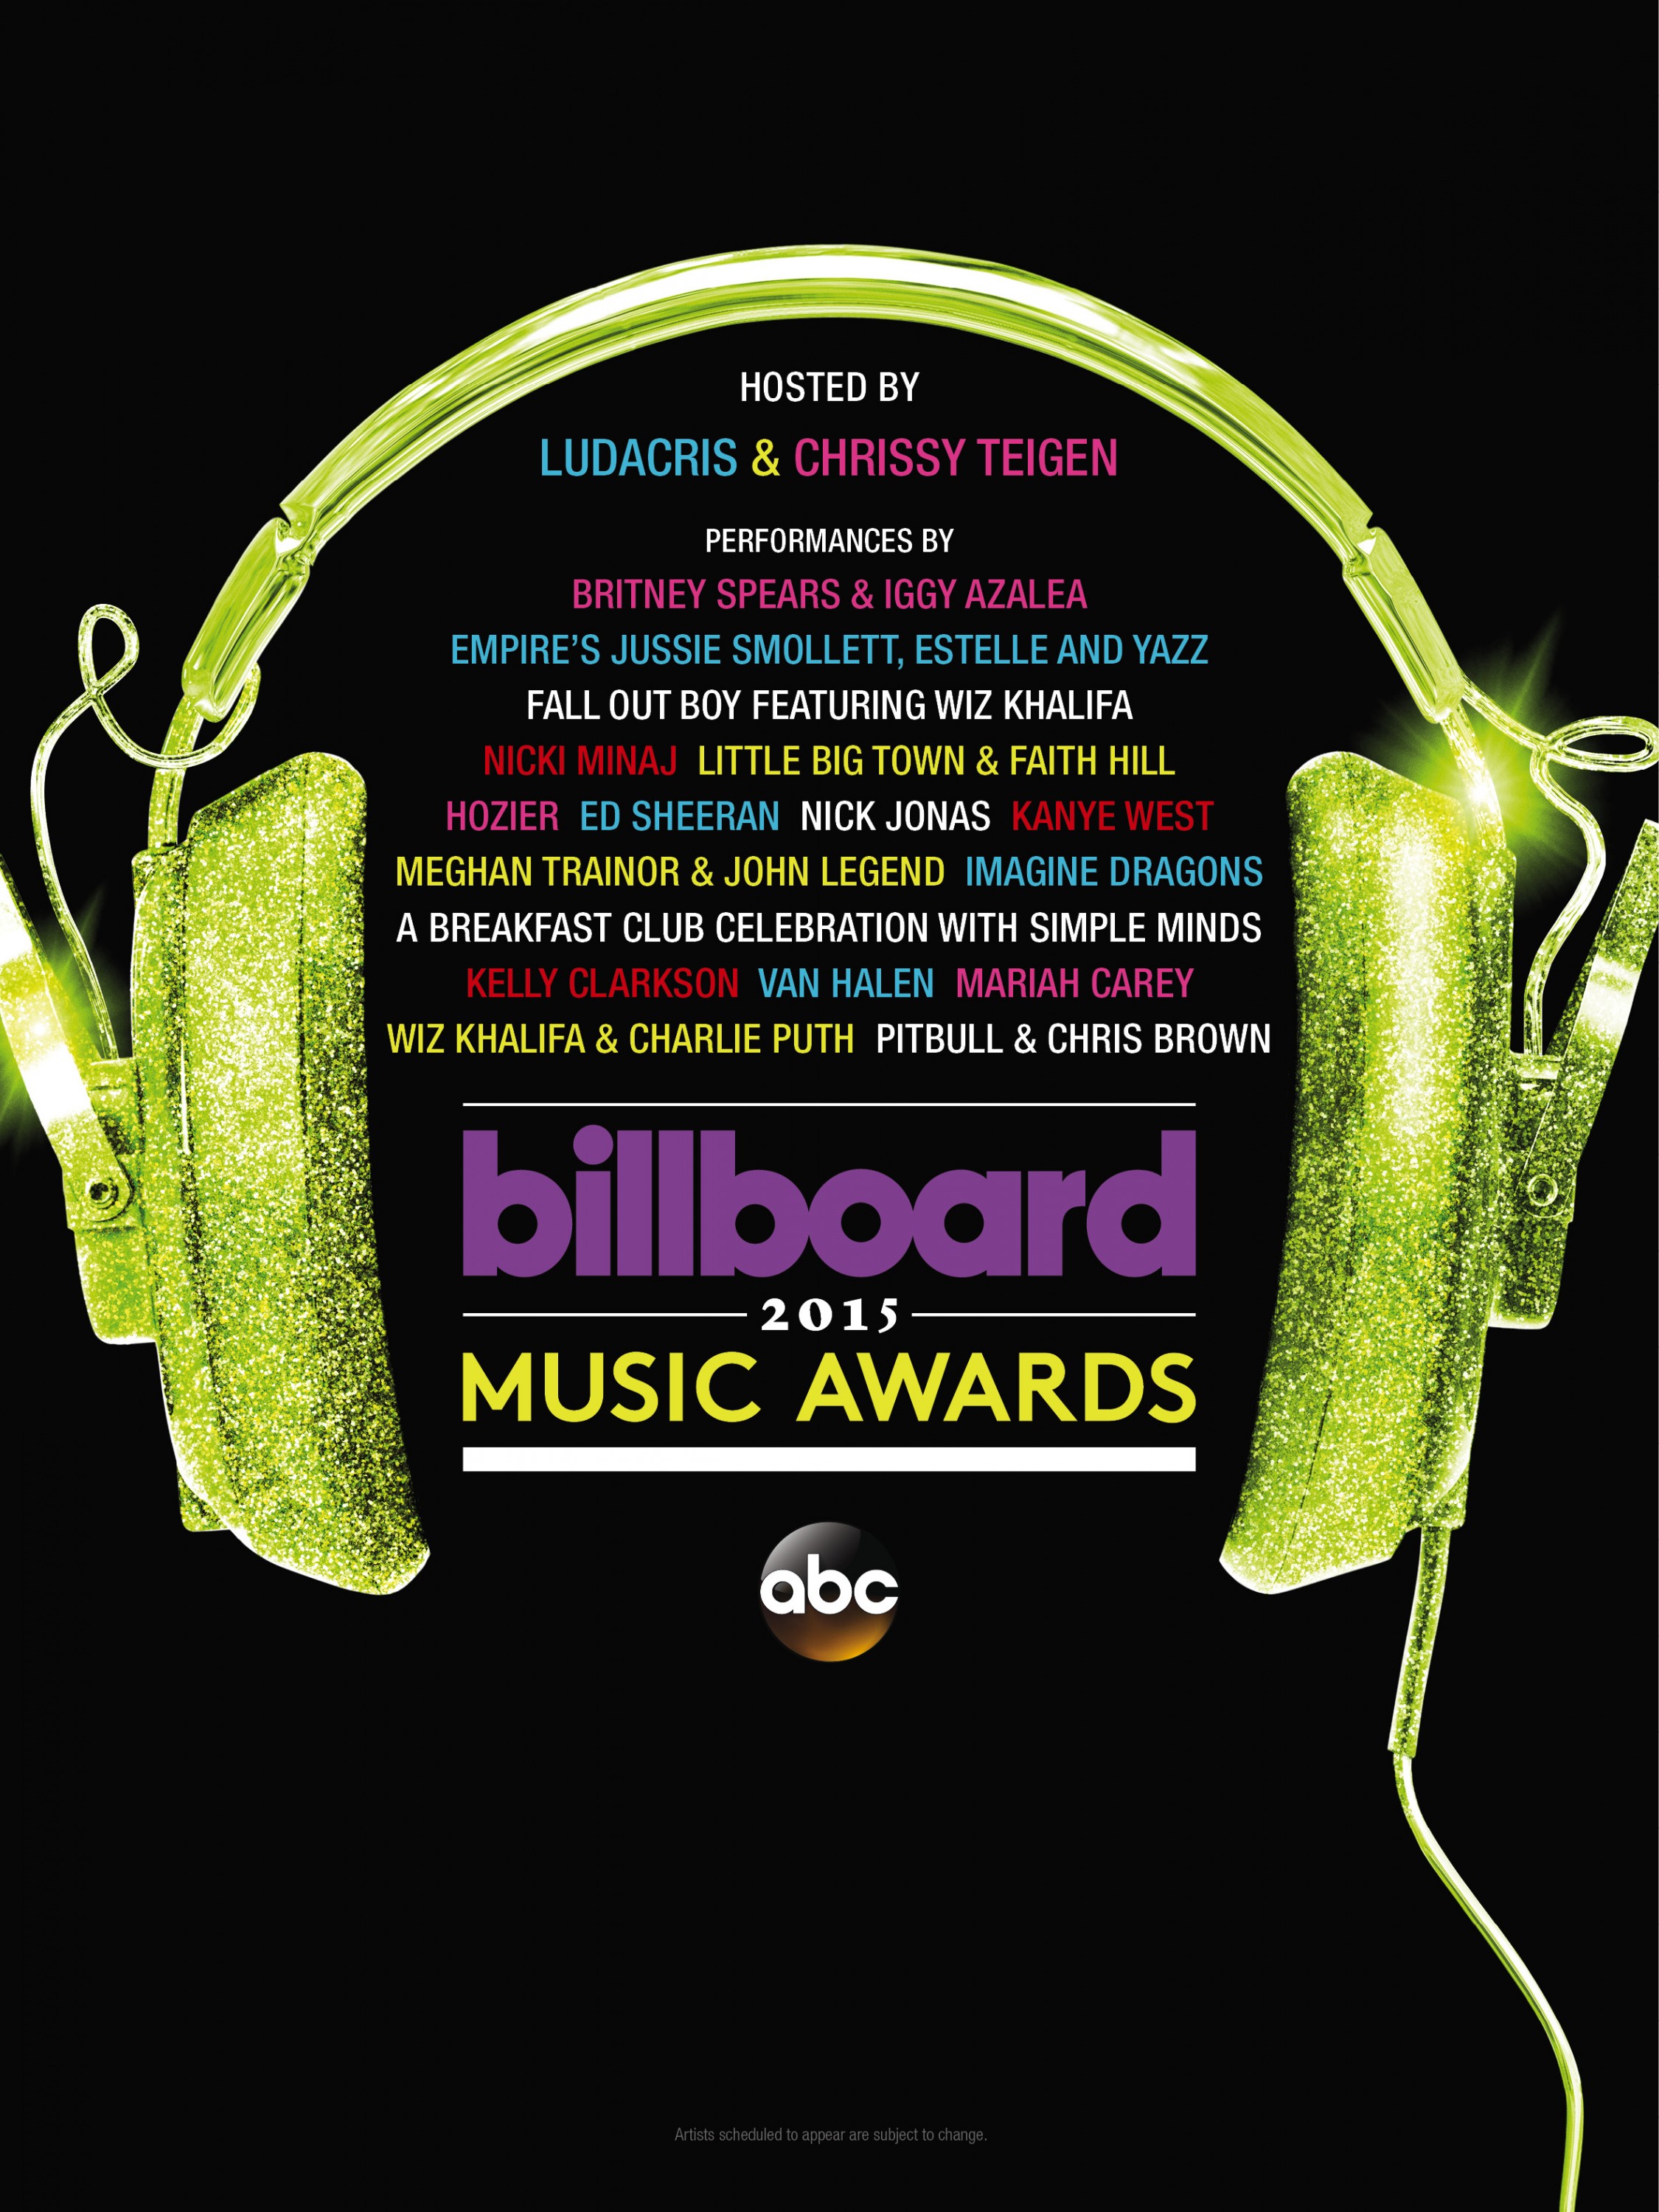 Mega Sized TV Poster Image for 2015 Billboard Music Awards (#4 of 7)